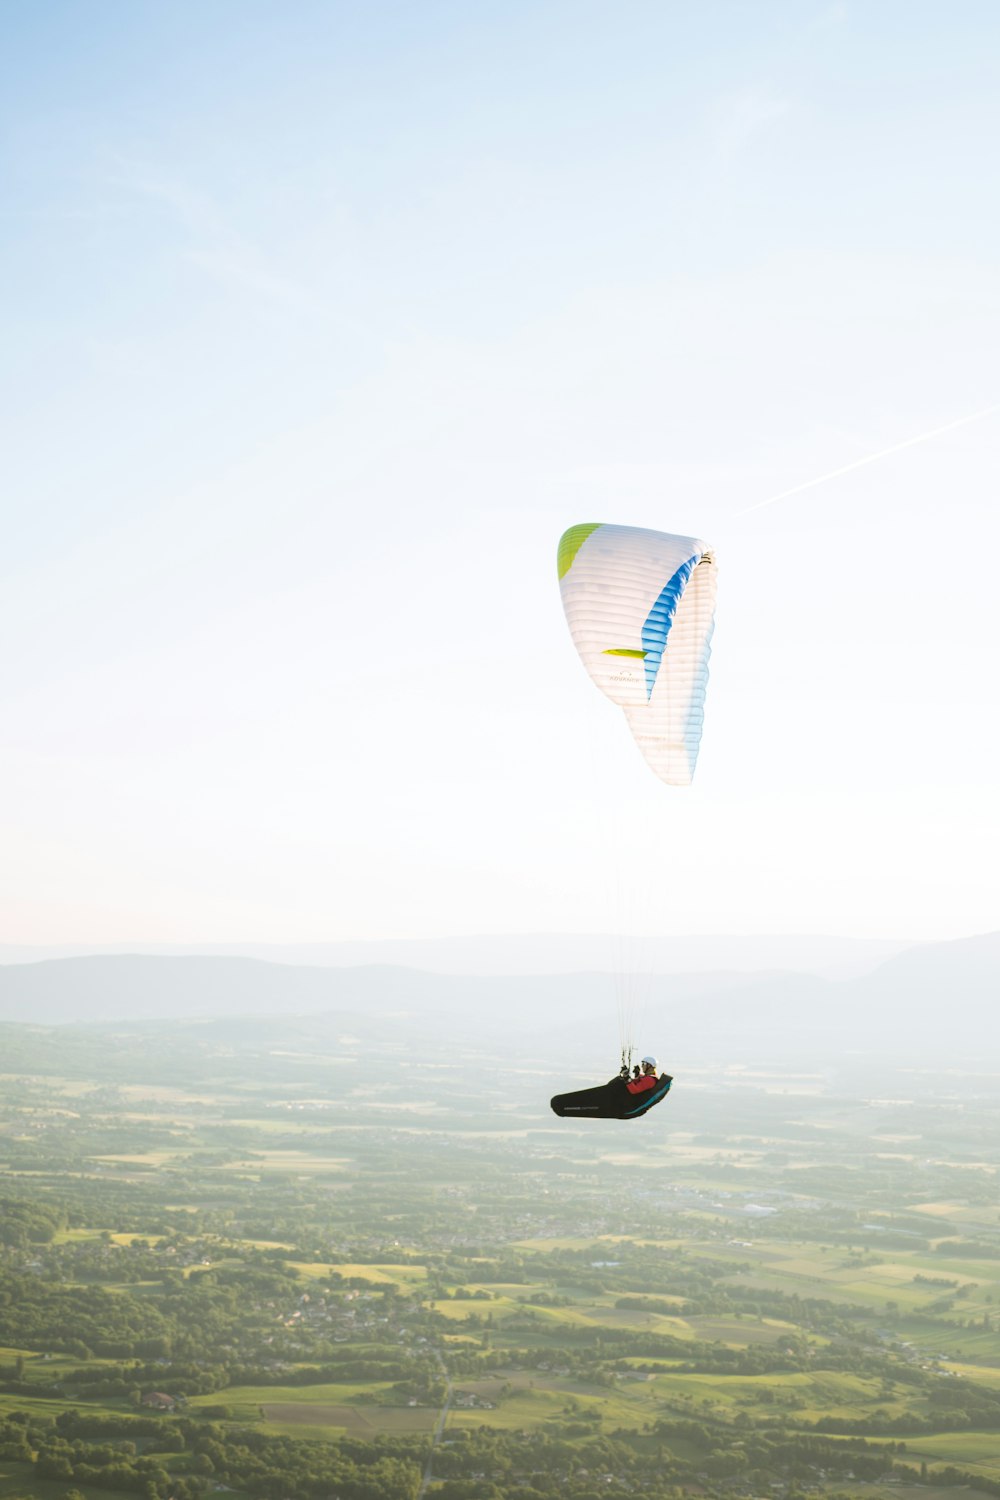 Fotografía aérea de un hombre saltando en paracaídas